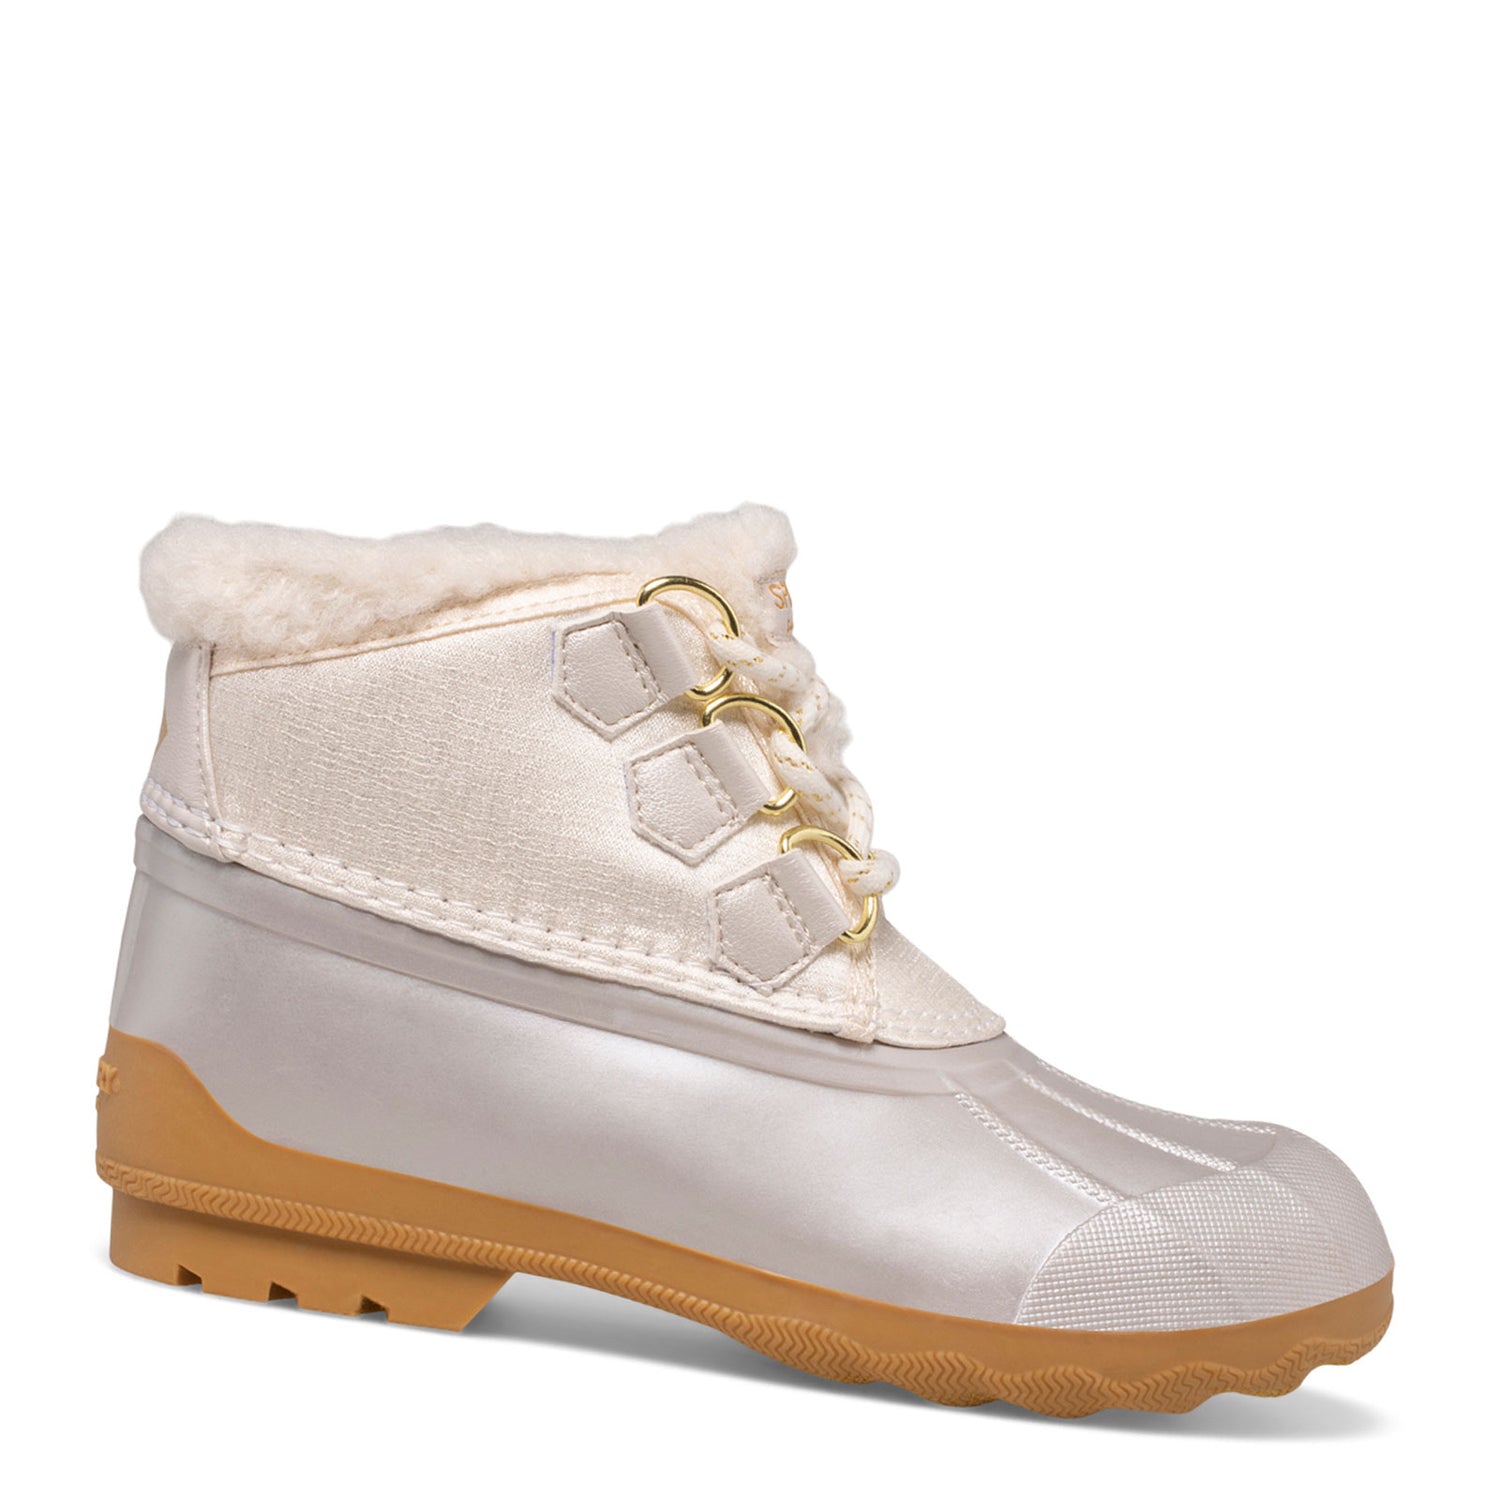 Peltz Shoes  Girl's Sperry Kids Port Alpine Boot - Little Kid & Big Kid WHITE SCK166207